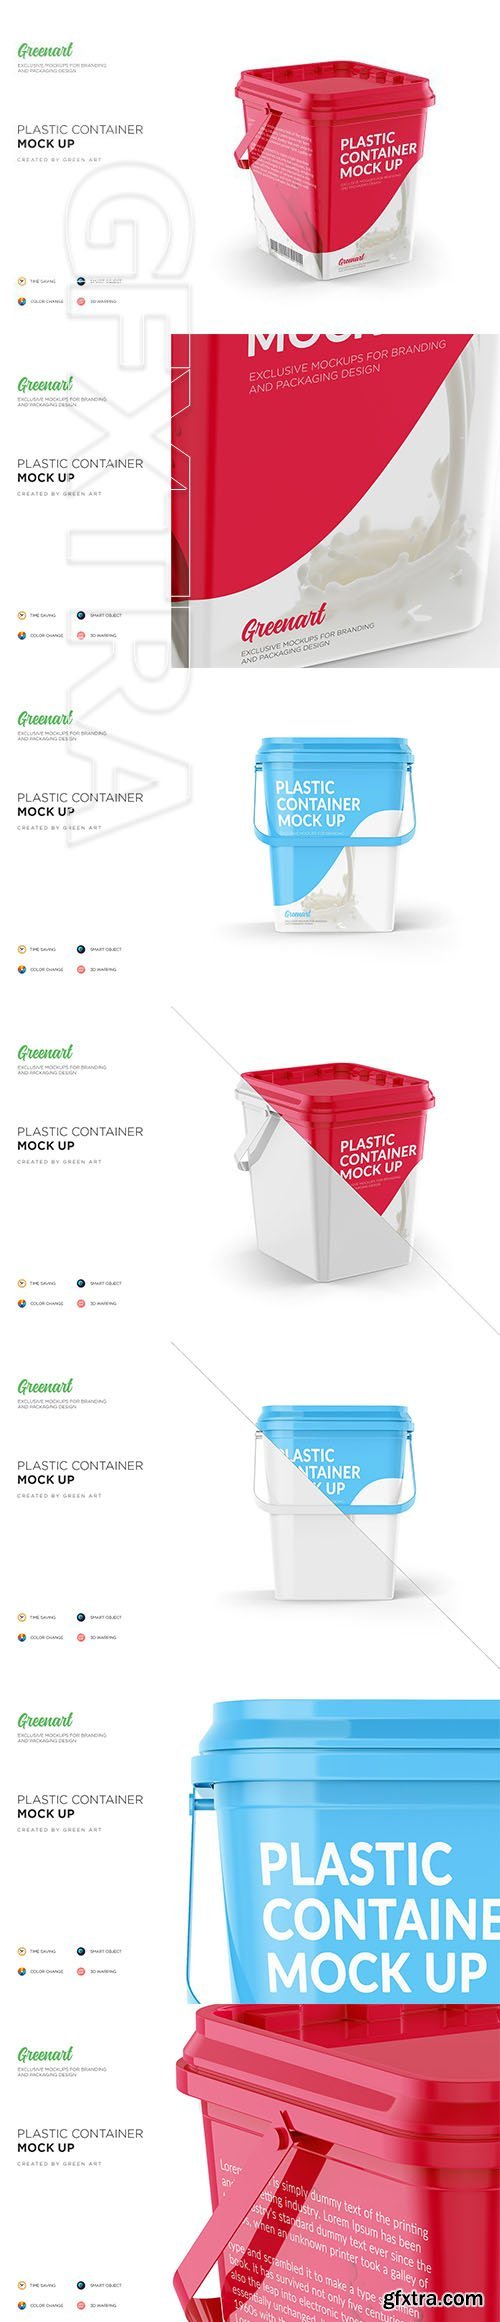 CreativeMarket - Plastic Container Mockup 3187491